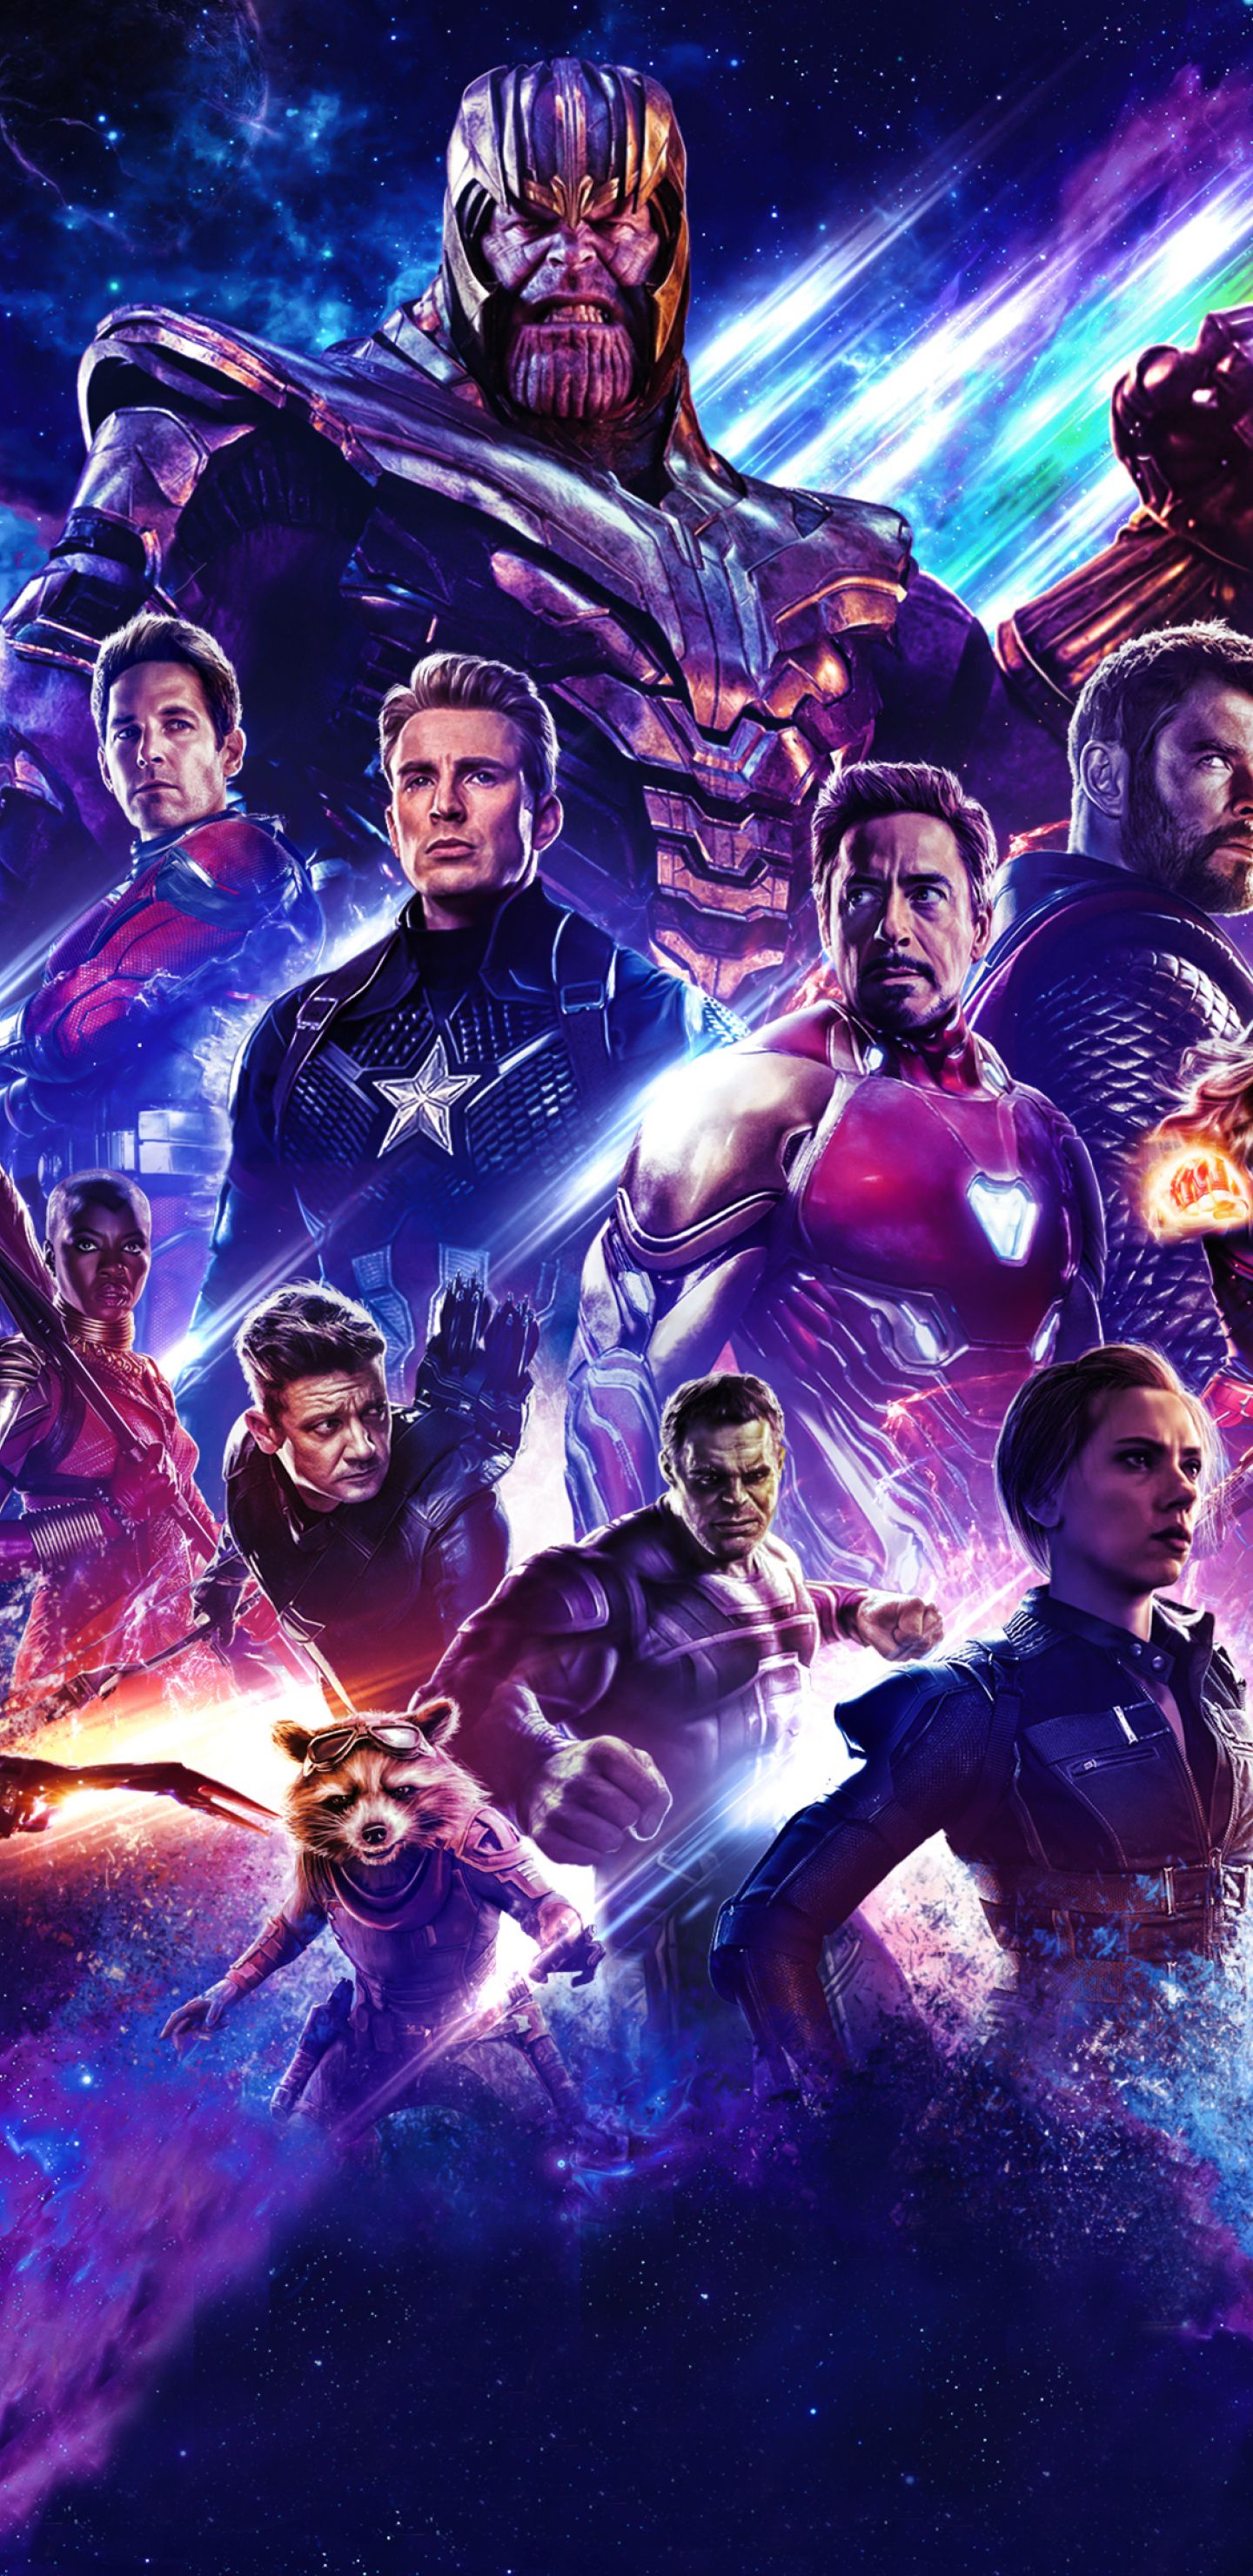 Avengers Endgame 2019 Movie Samsung Galaxy Note S9